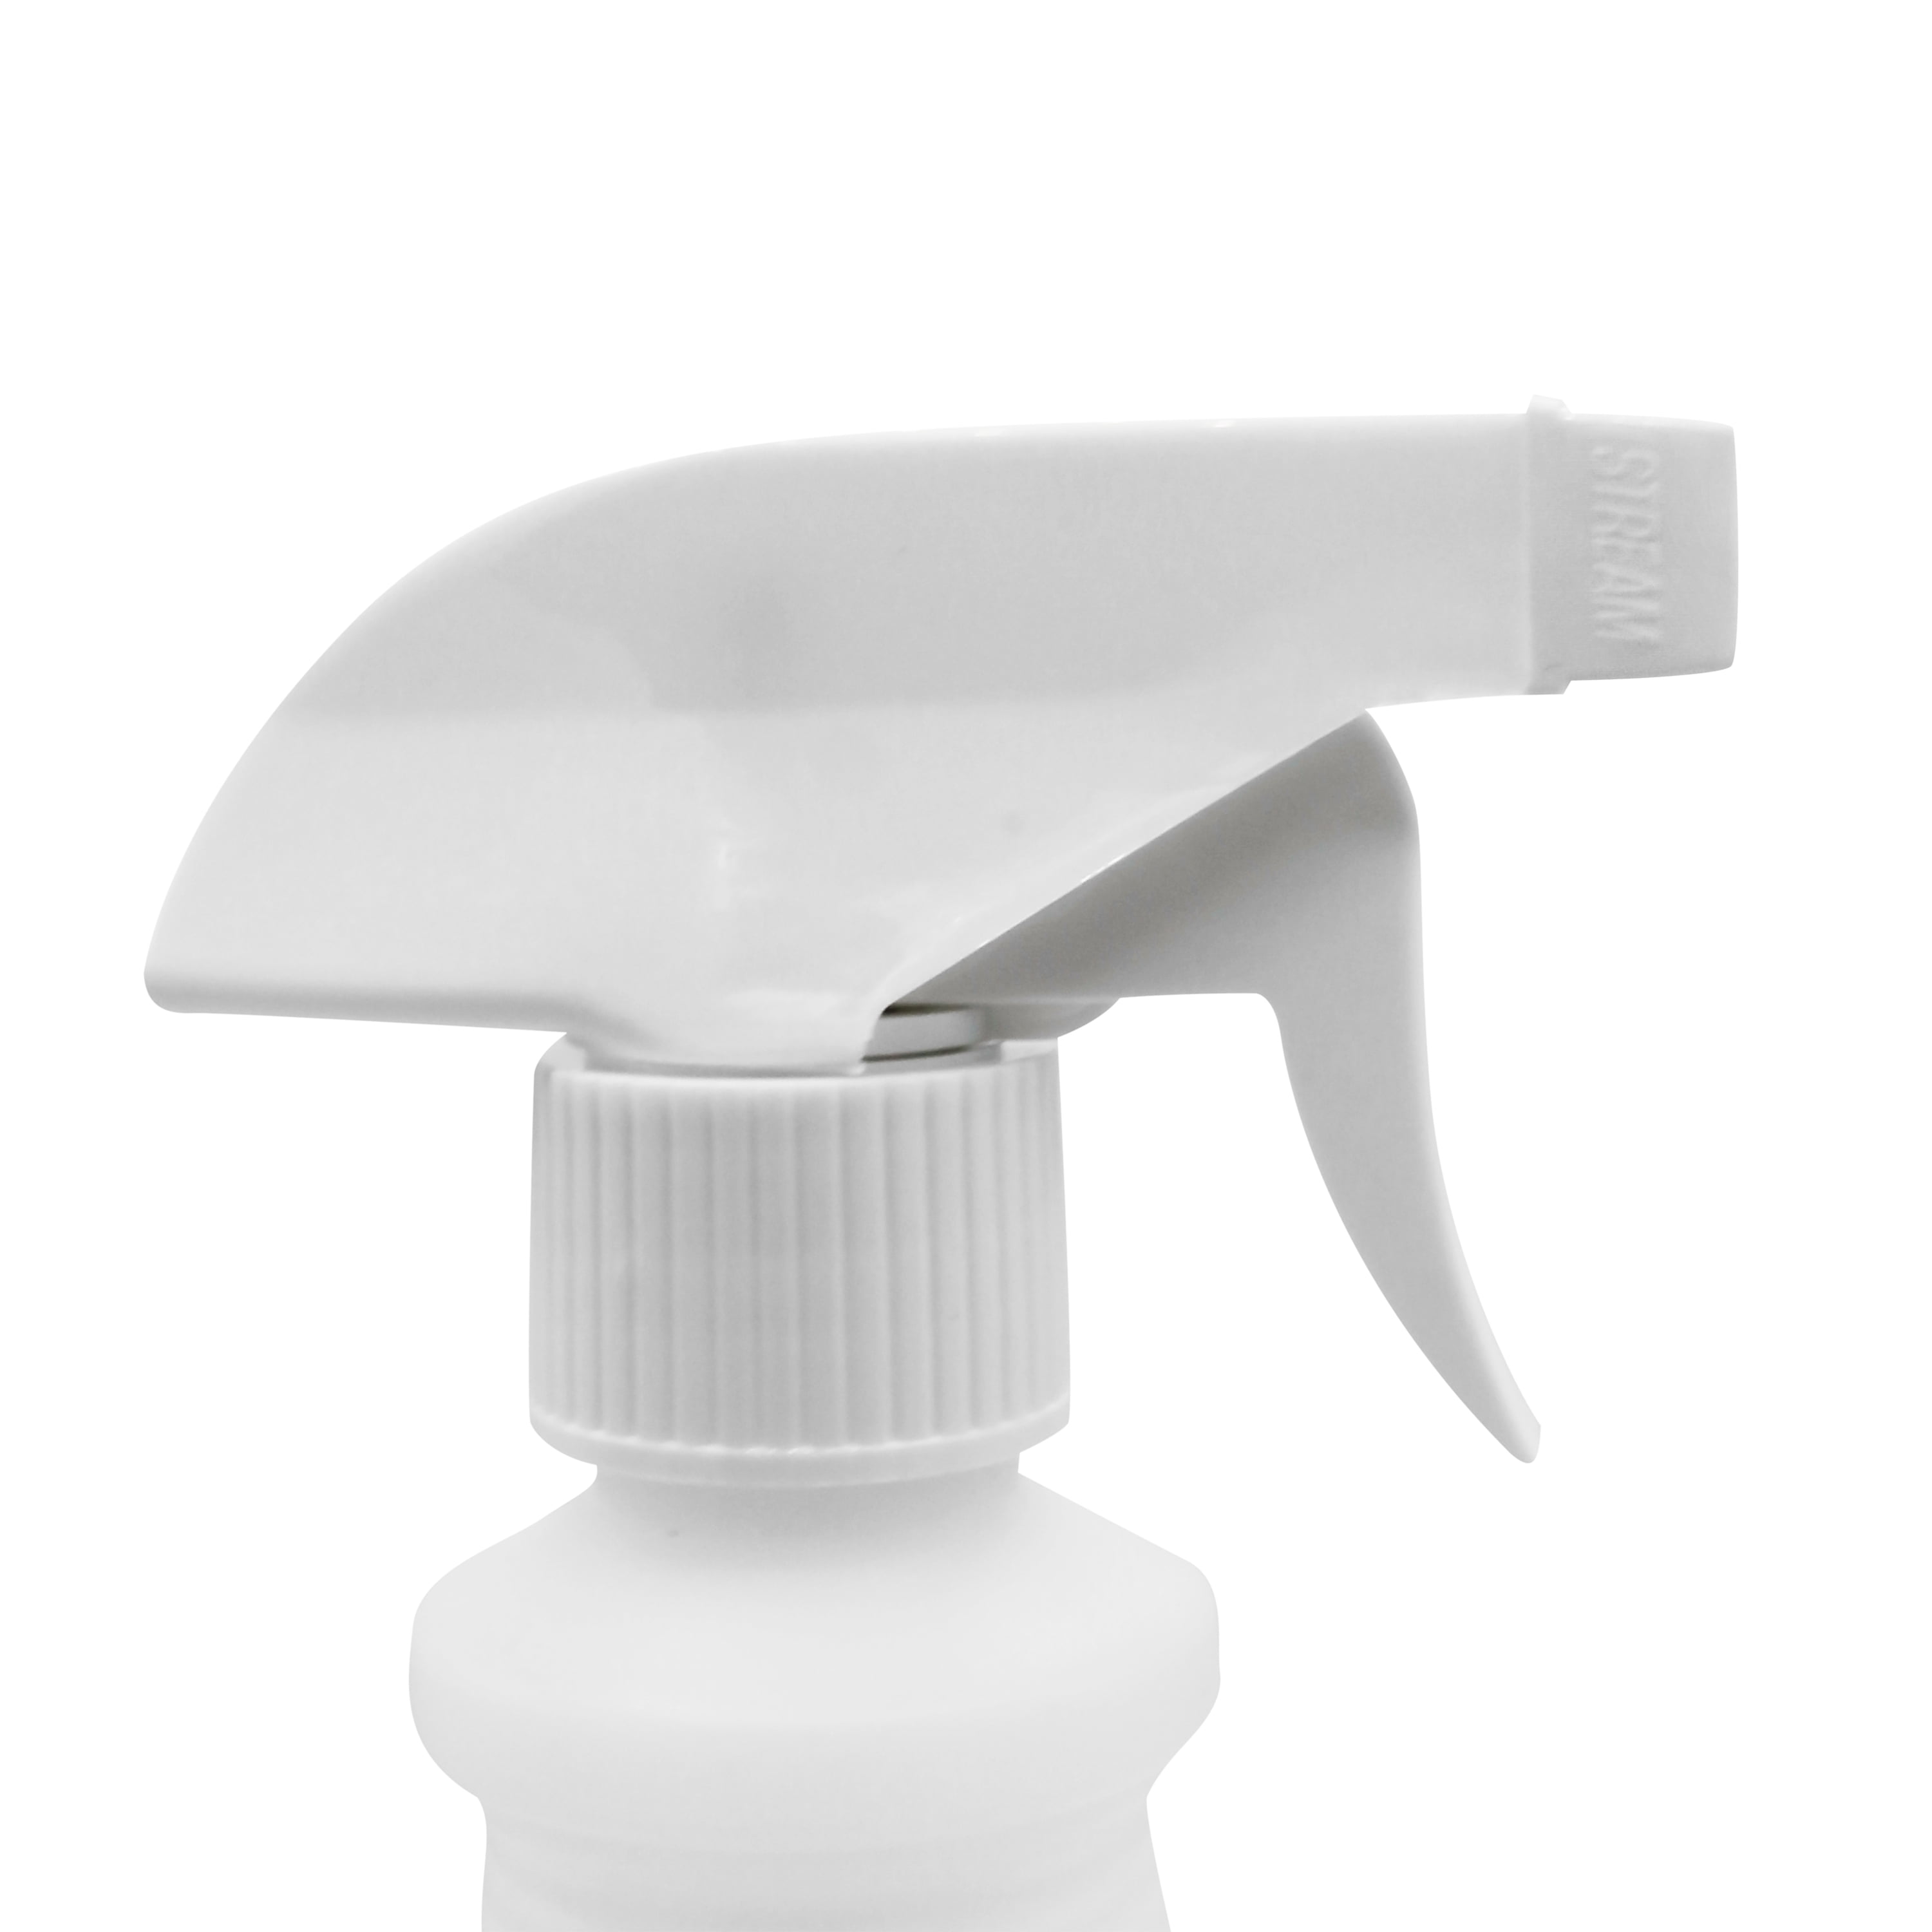 SUPPLYAID 32 oz. All-Purpose Leak-Proof Plastic Spray Bottles with